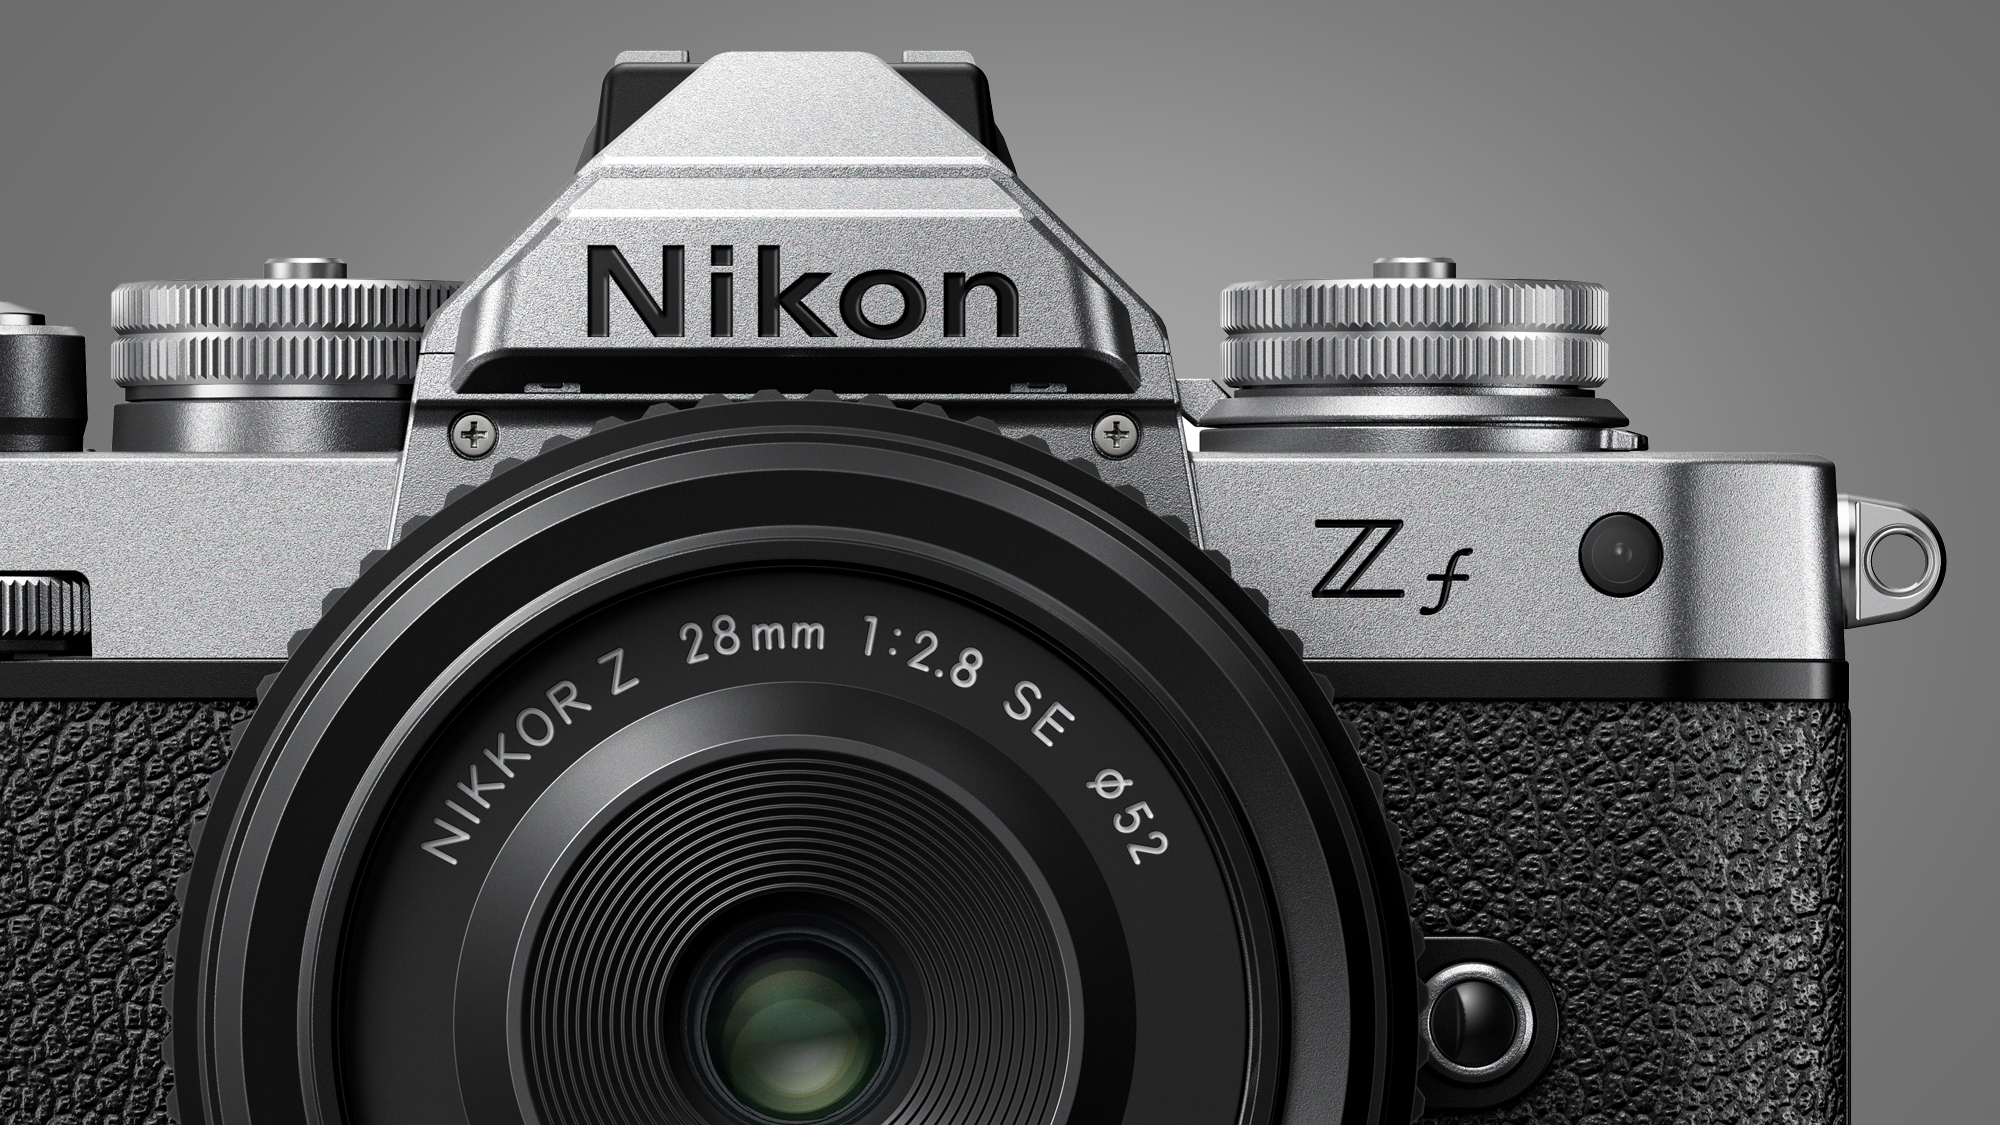 Nikon Zfc camera on a gray background